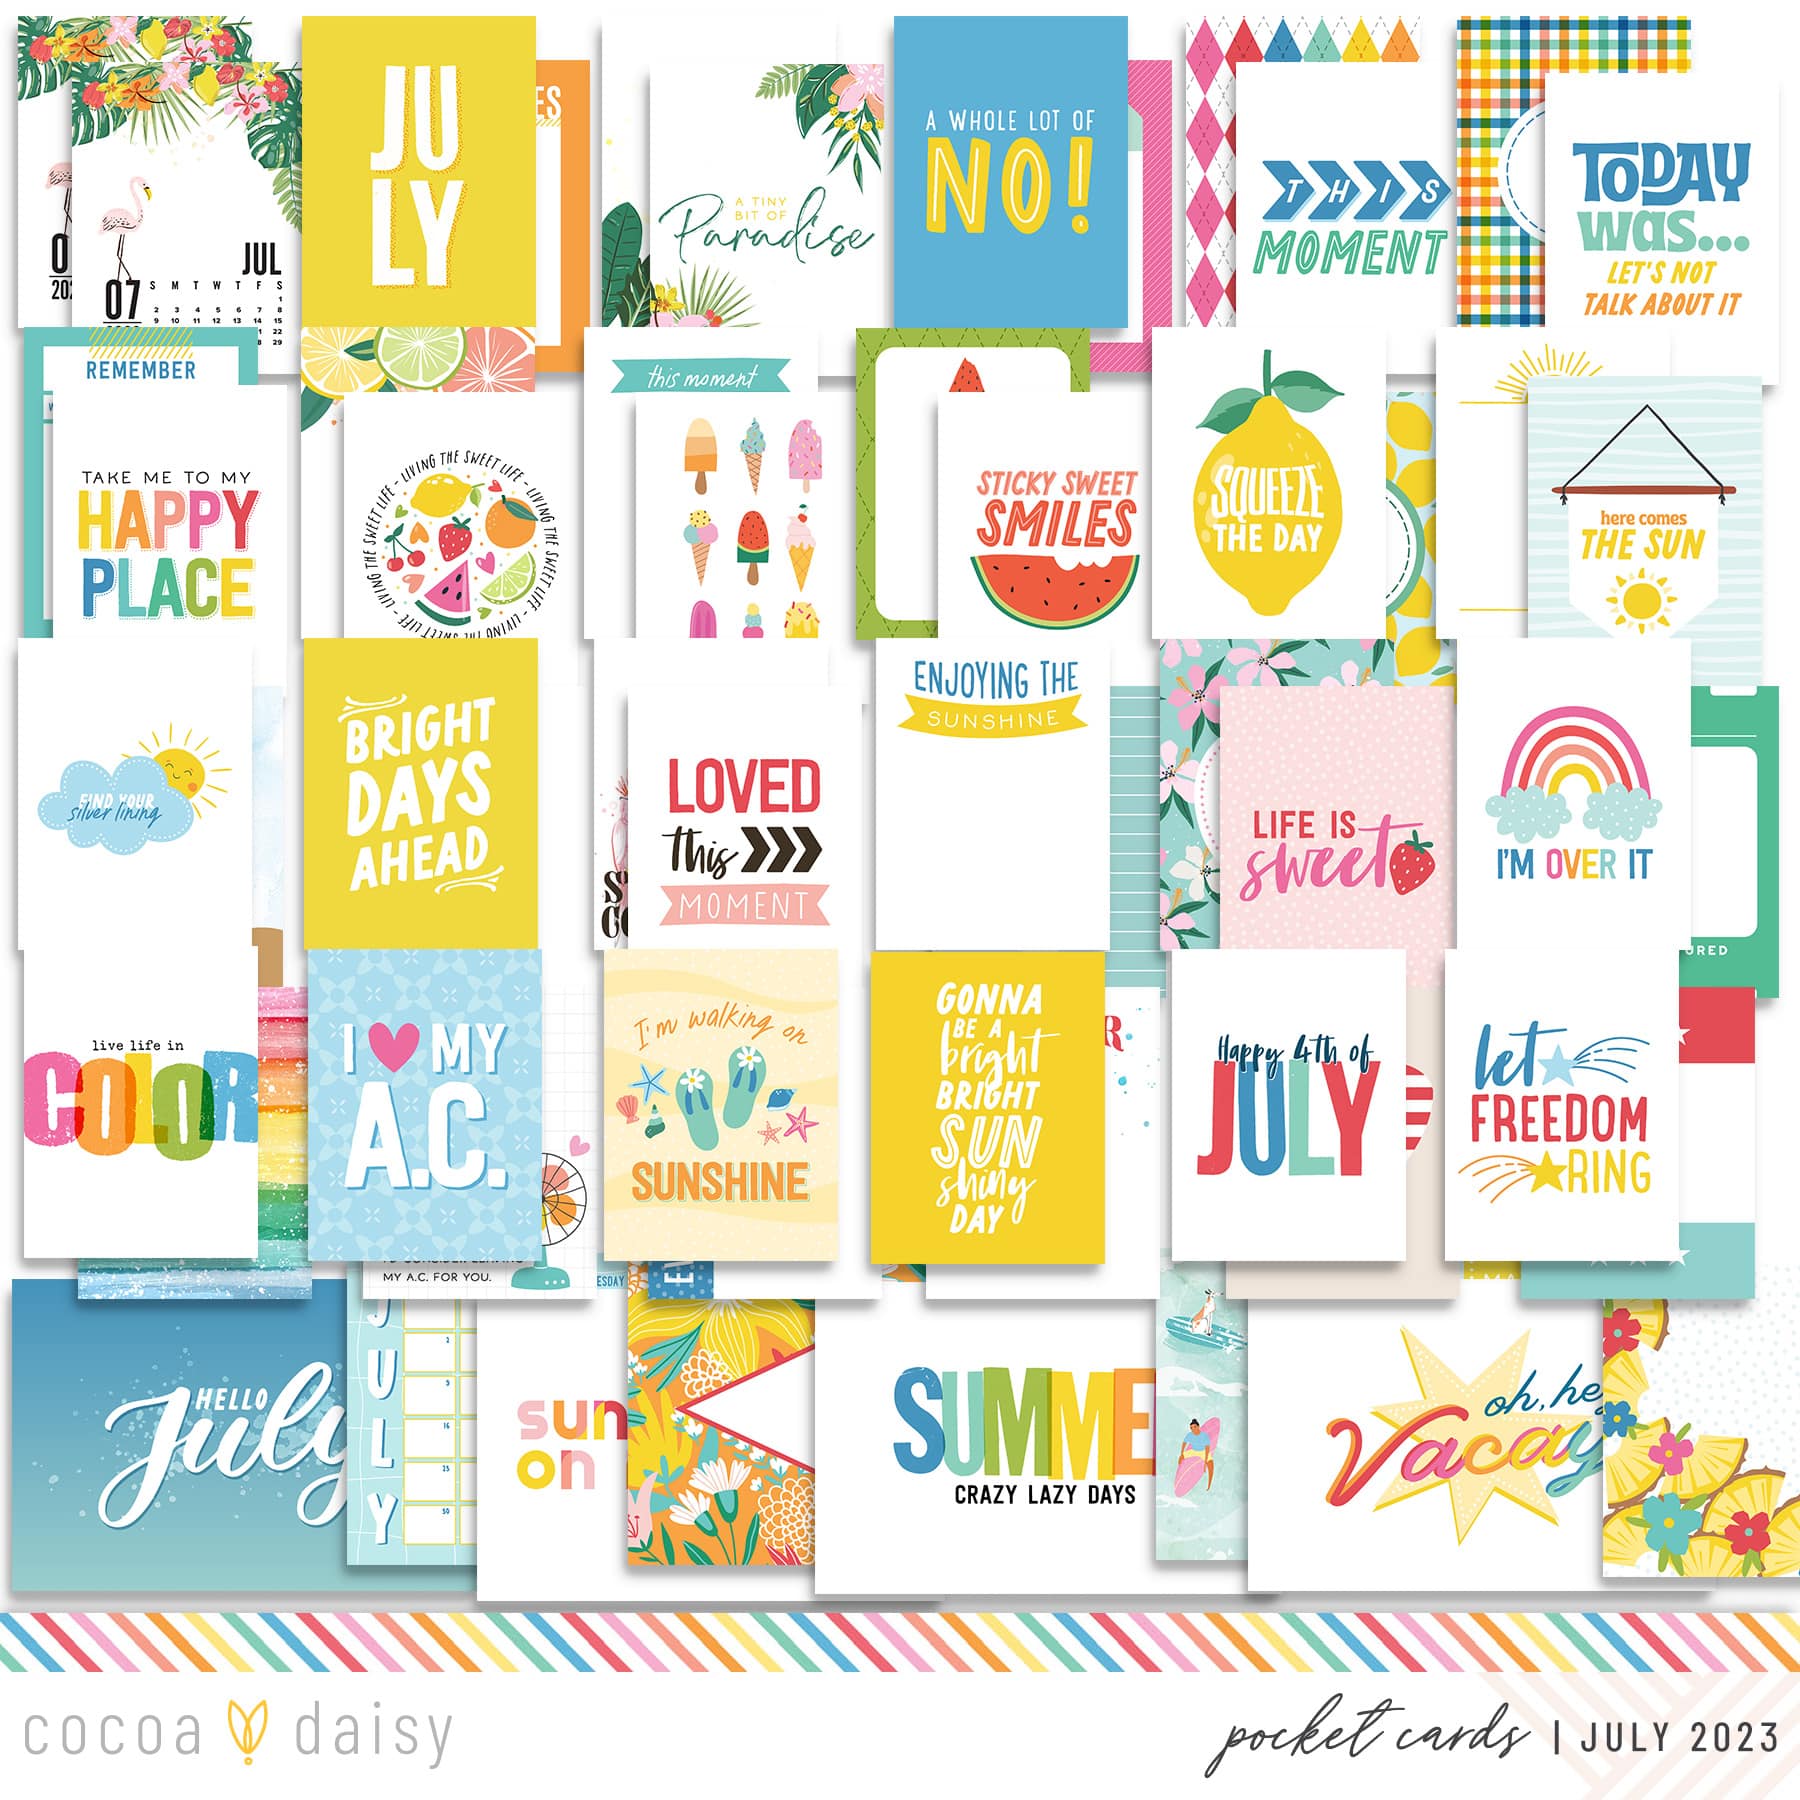 Summer-Vibes-July-2023-Pocket-Cards.jpg